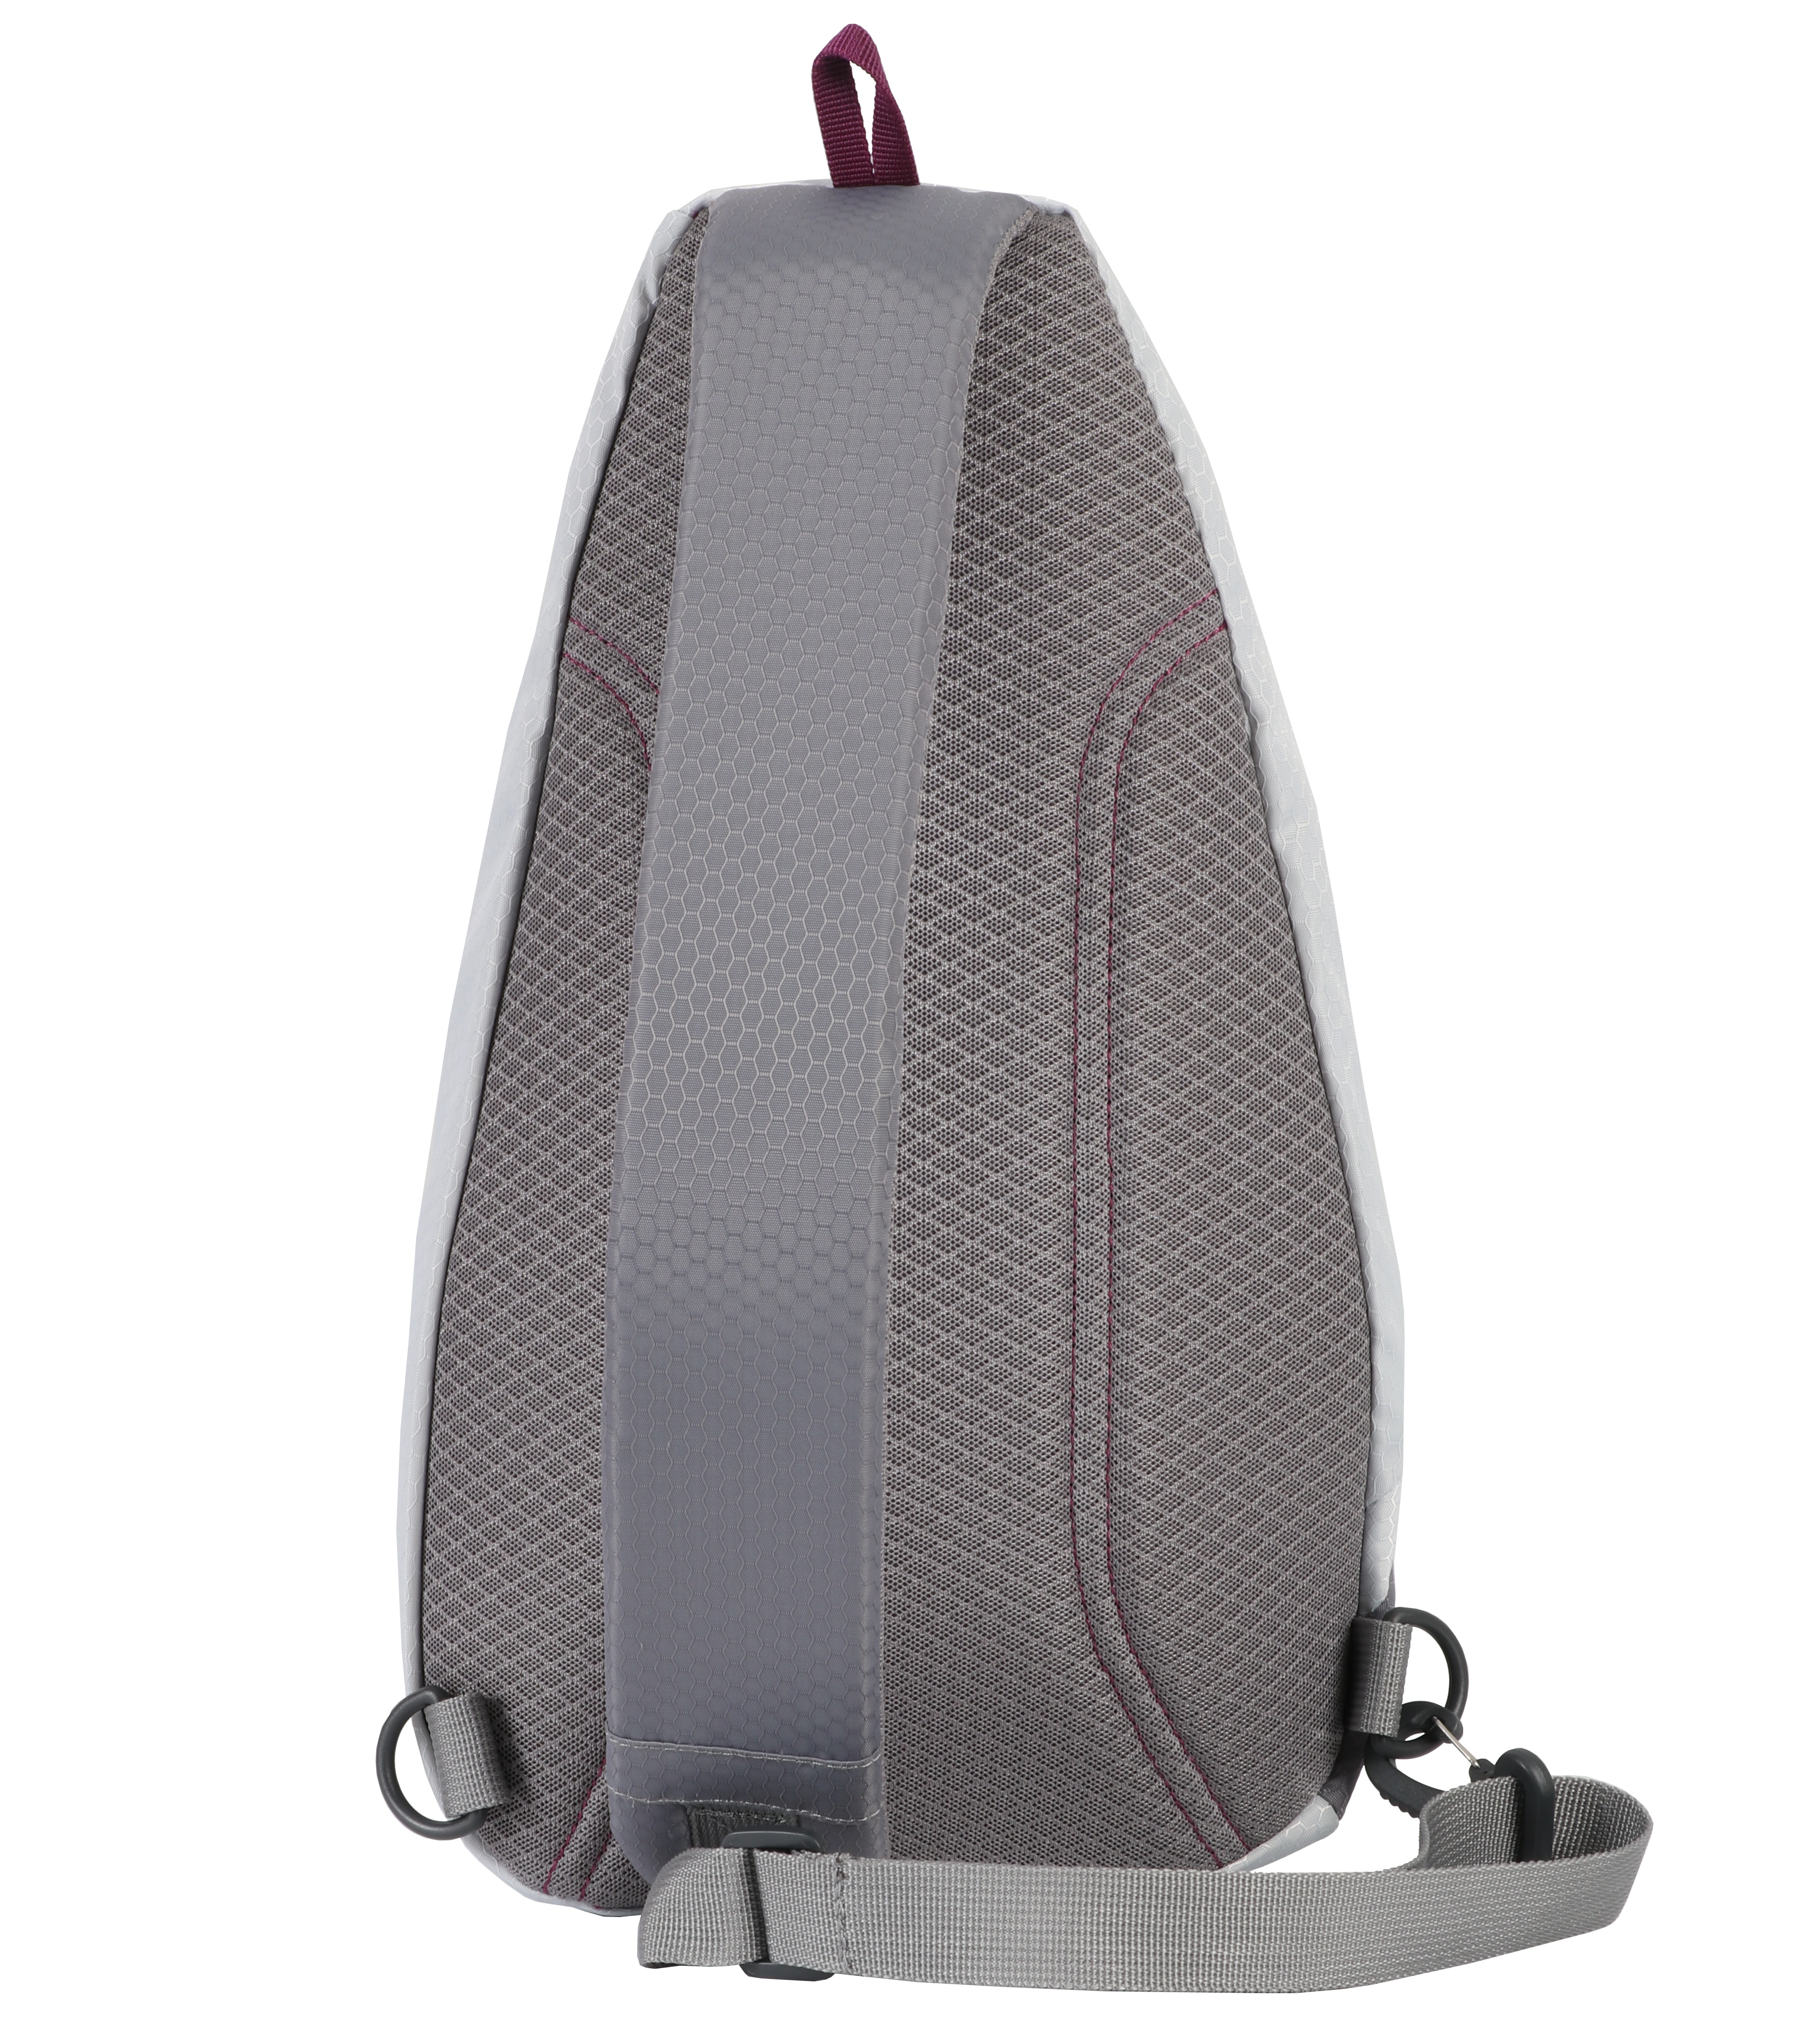 Ozark Trail 7 Liter Sling Backpack, Gray Polyester - image 3 of 6